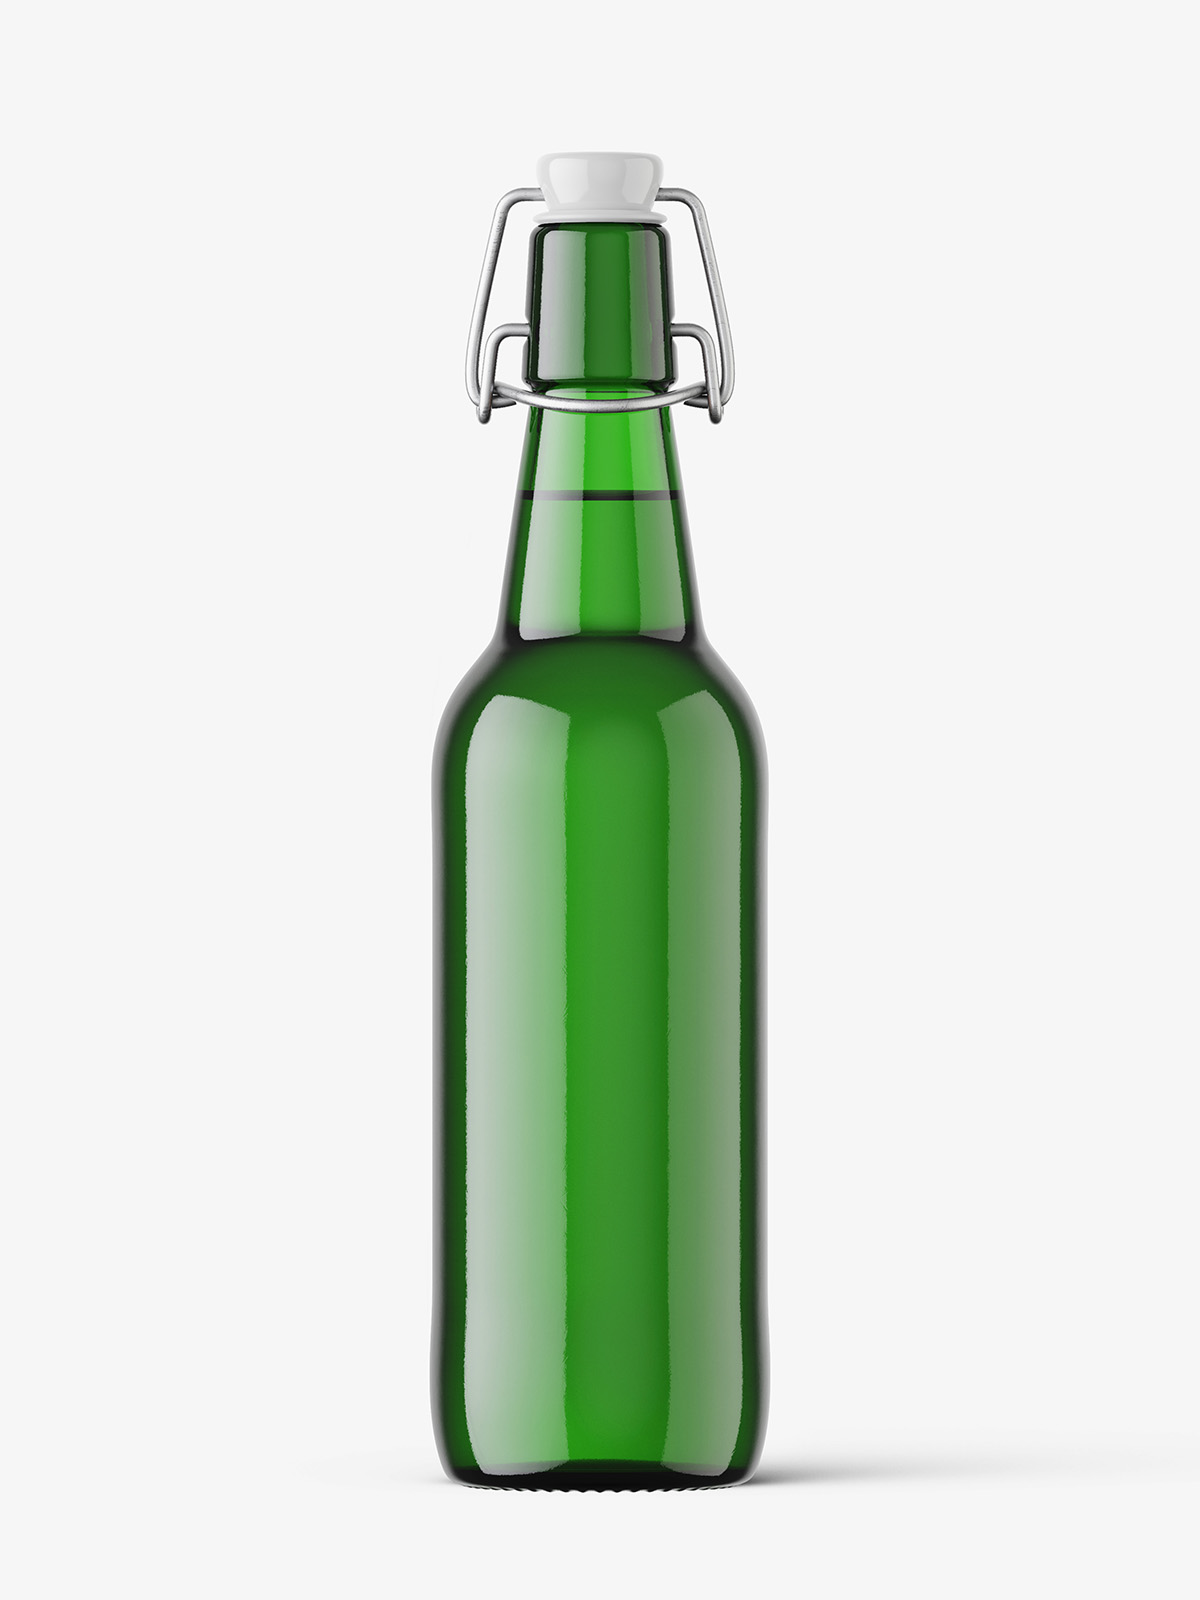 Download Green beer bottle with swing top cap mockup - Smarty Mockups